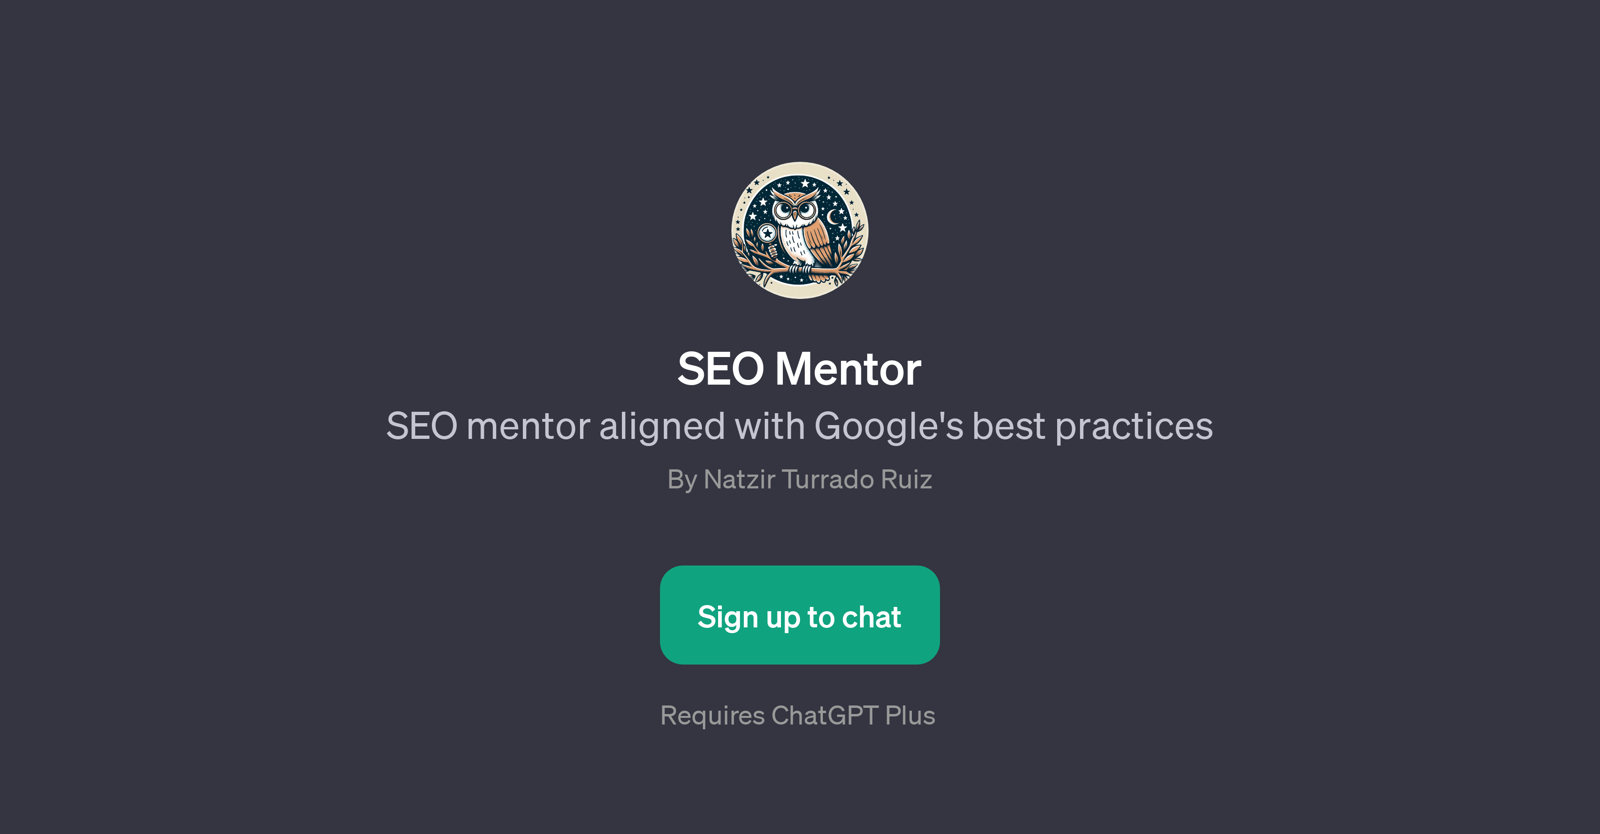 SEO Mentor website